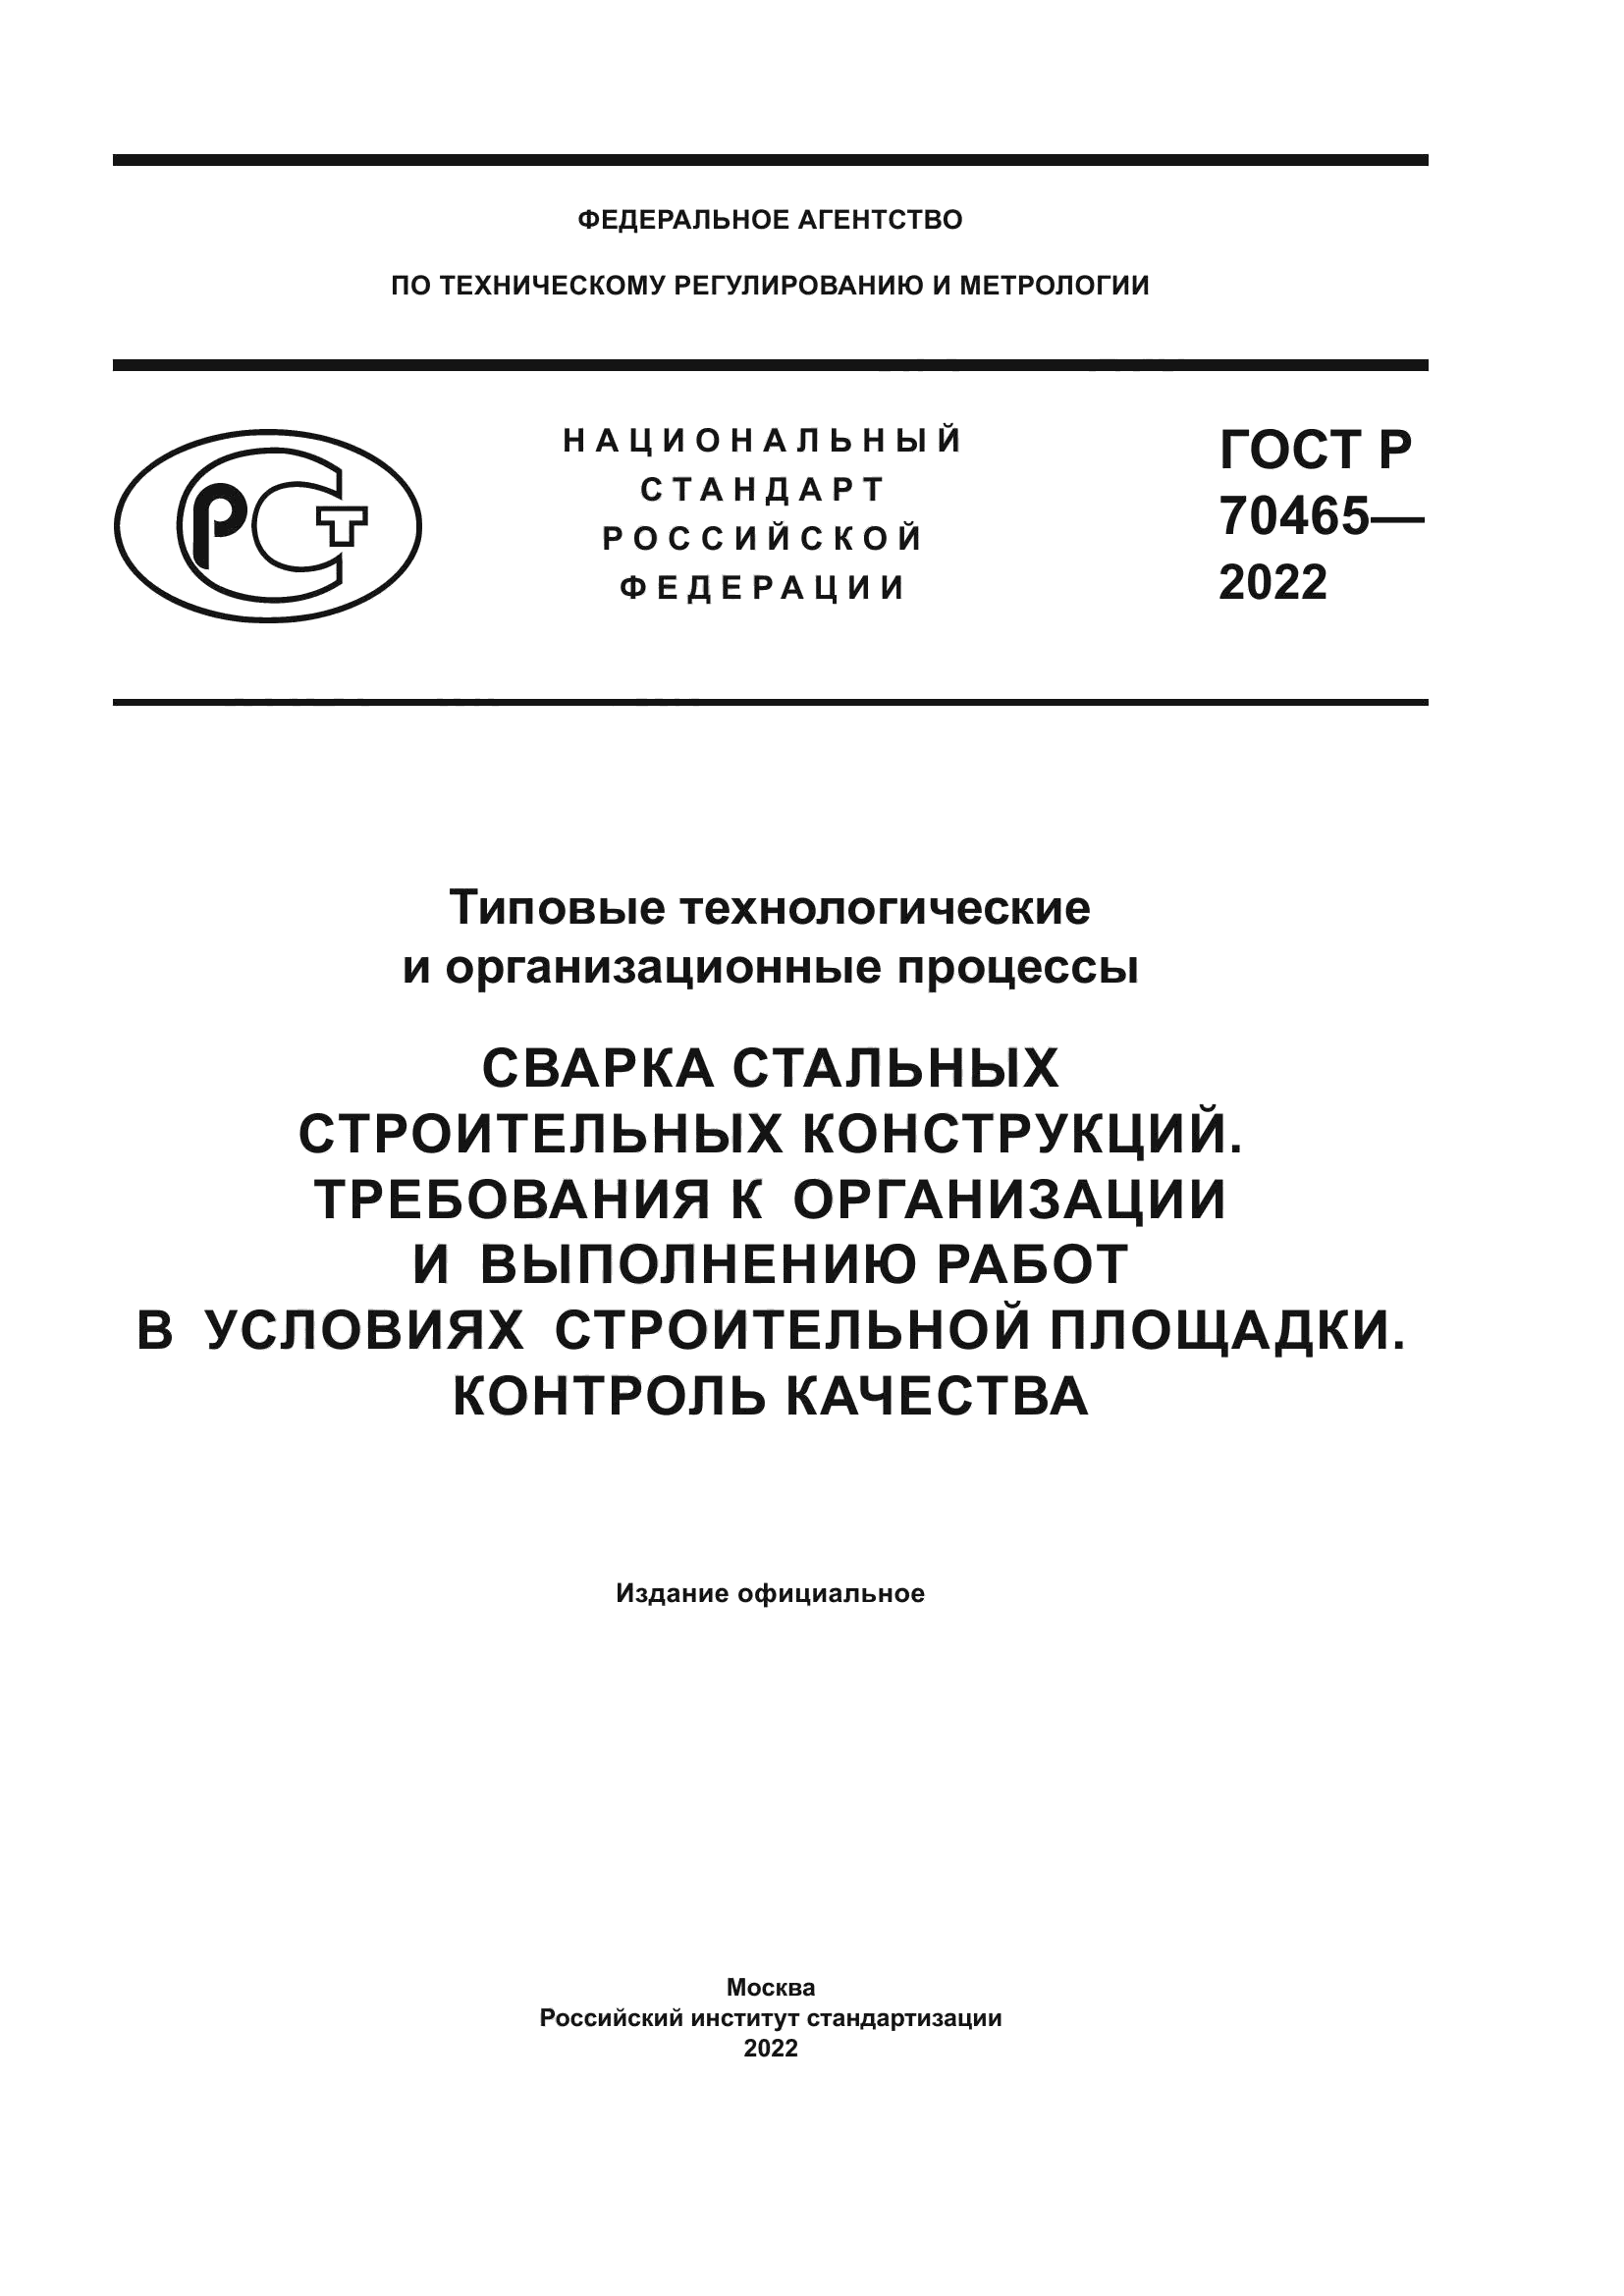 ГОСТ Р 70465-2022